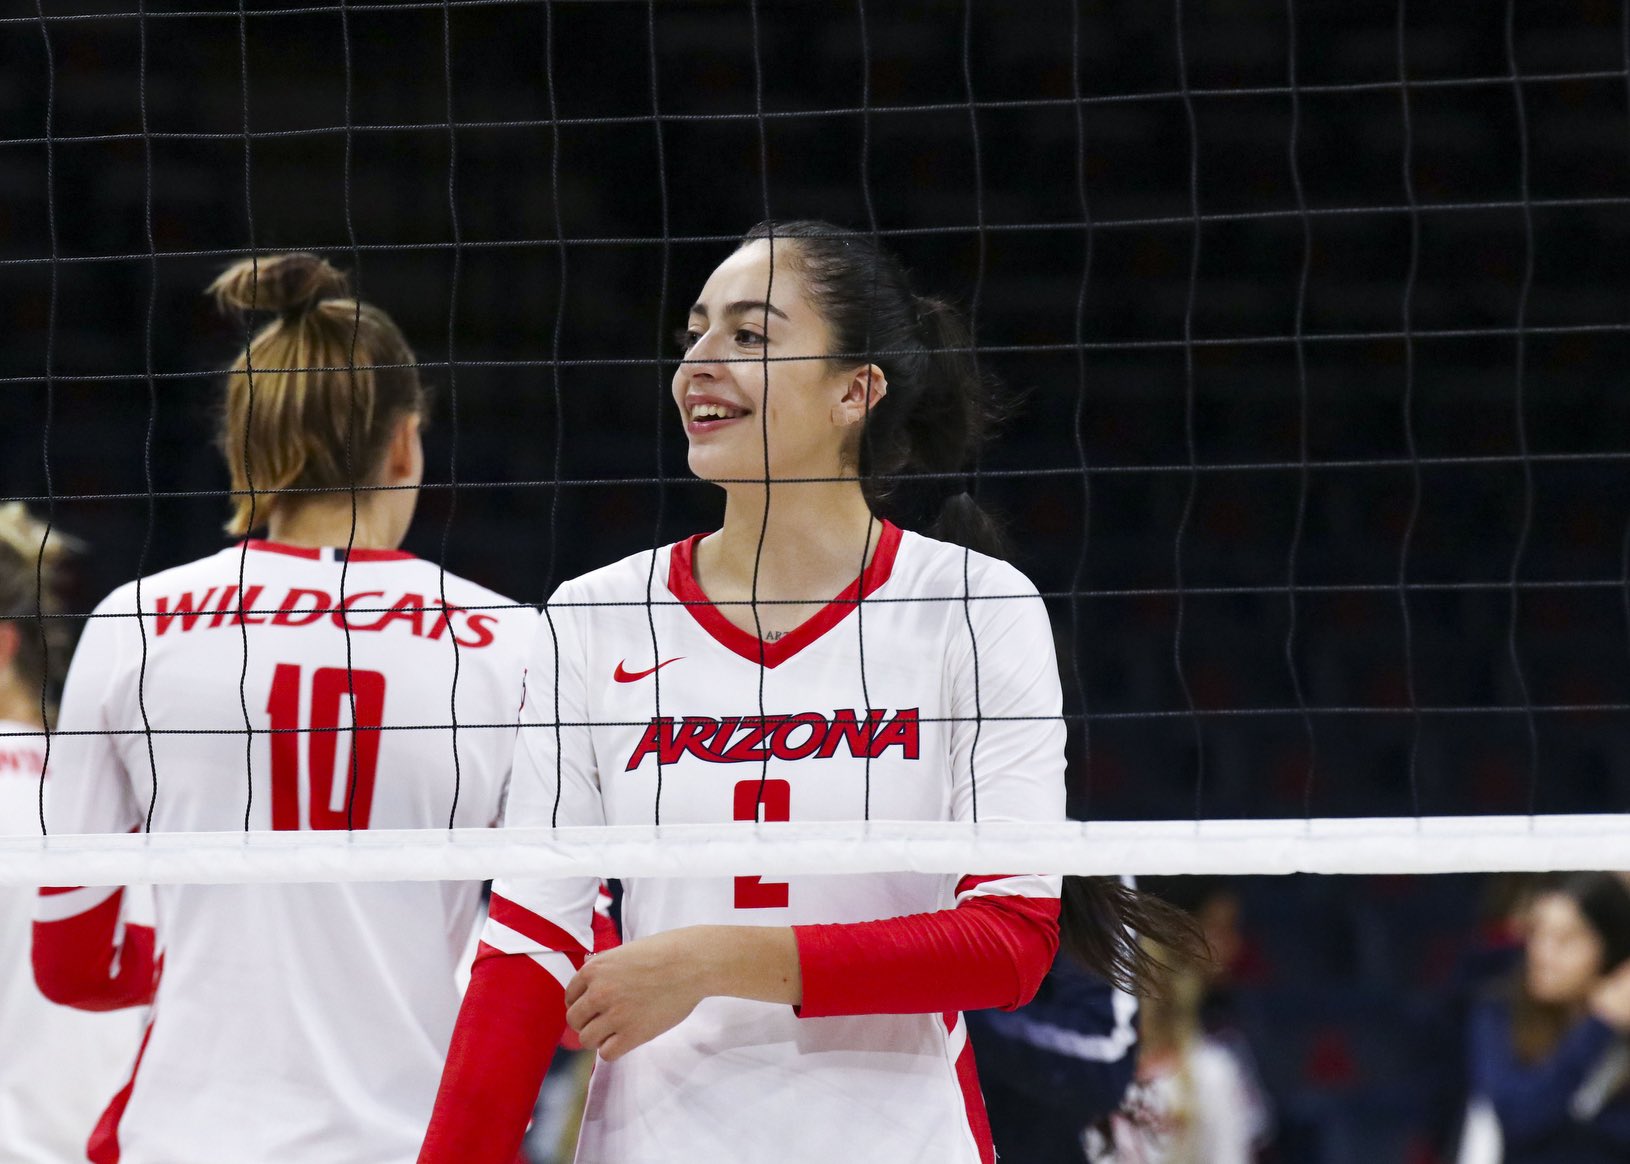 Arizona volleyball player Sofia Maldonado Diaz faces the camera and teammate Puk Stubbe faces away from the camera